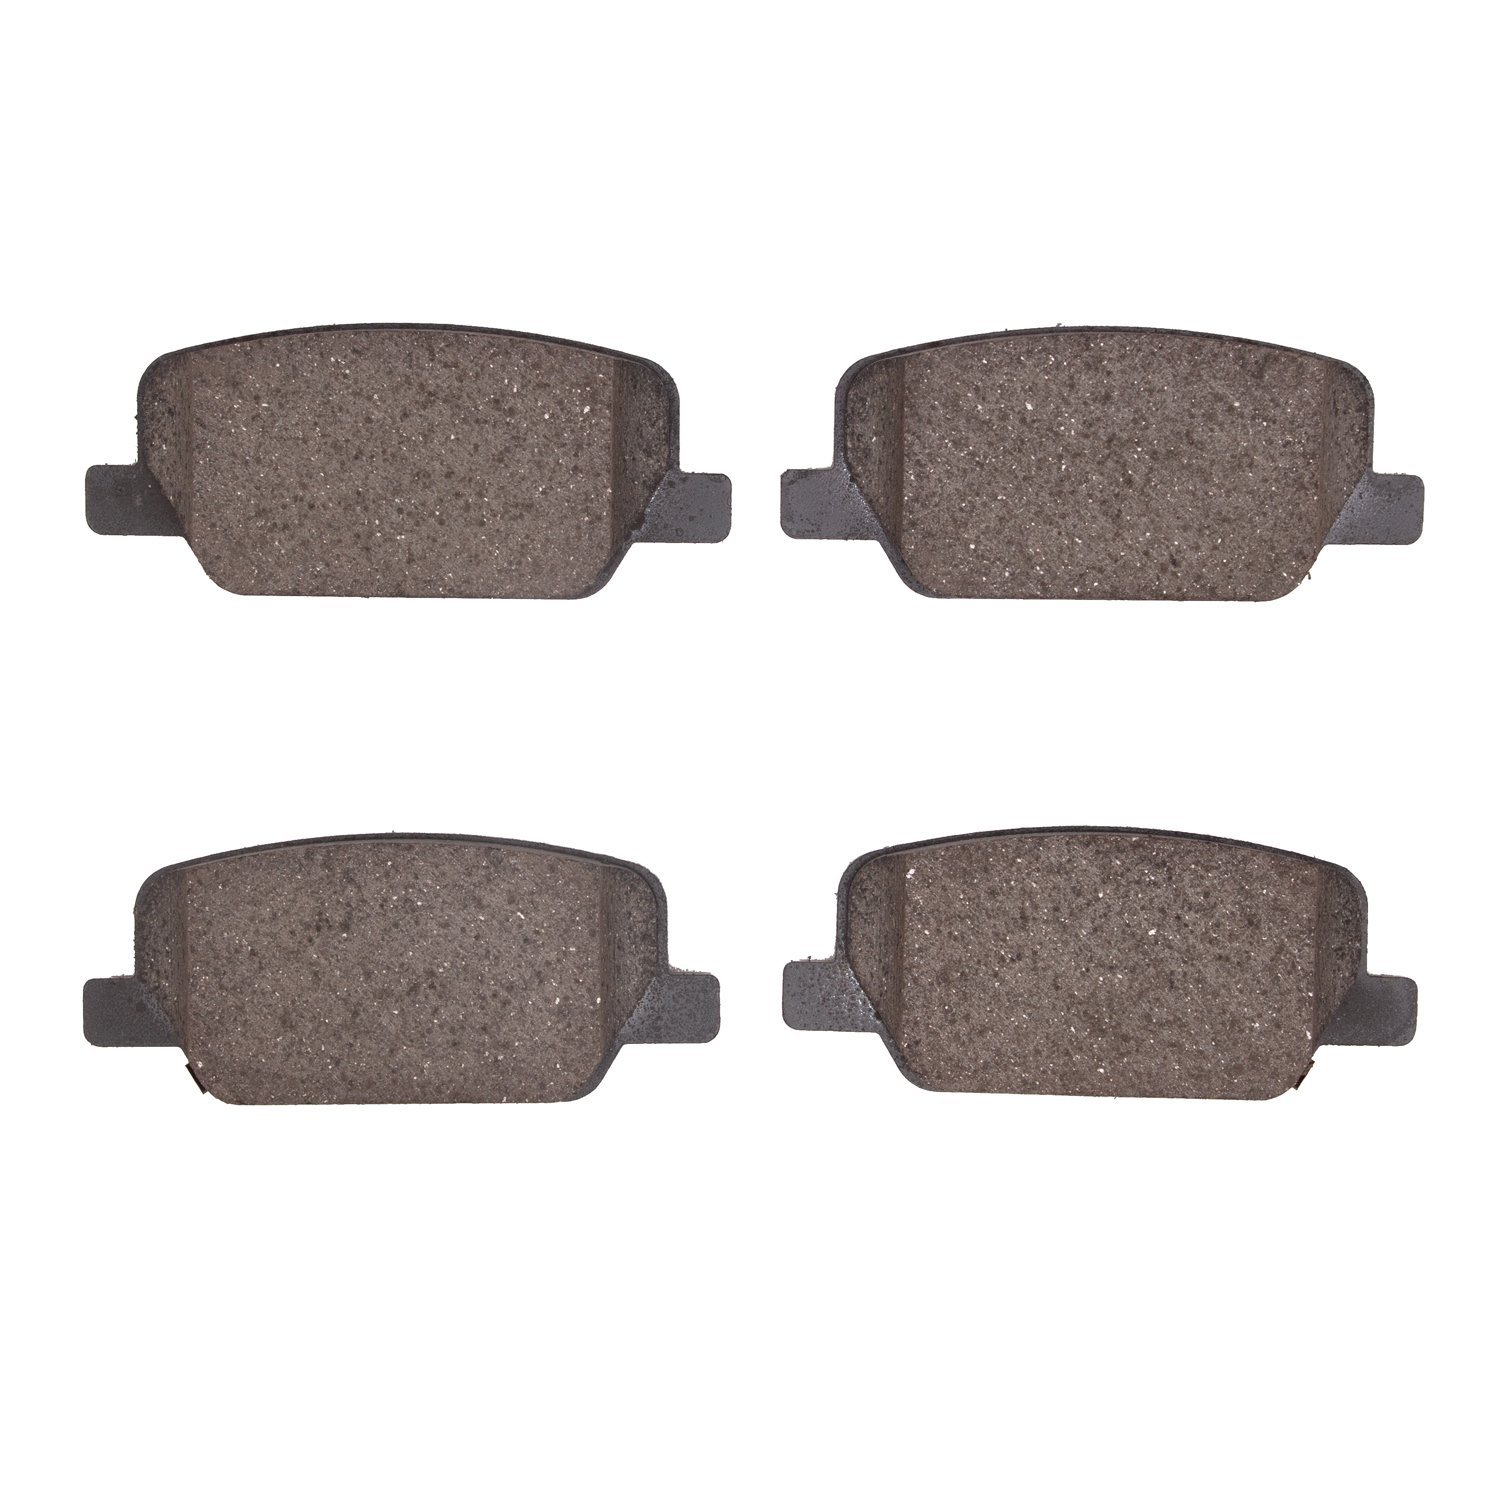 1310-2199-00 3000-Series Ceramic Brake Pads, Fits Select Kia/Hyundai/Genesis, Position: Rear